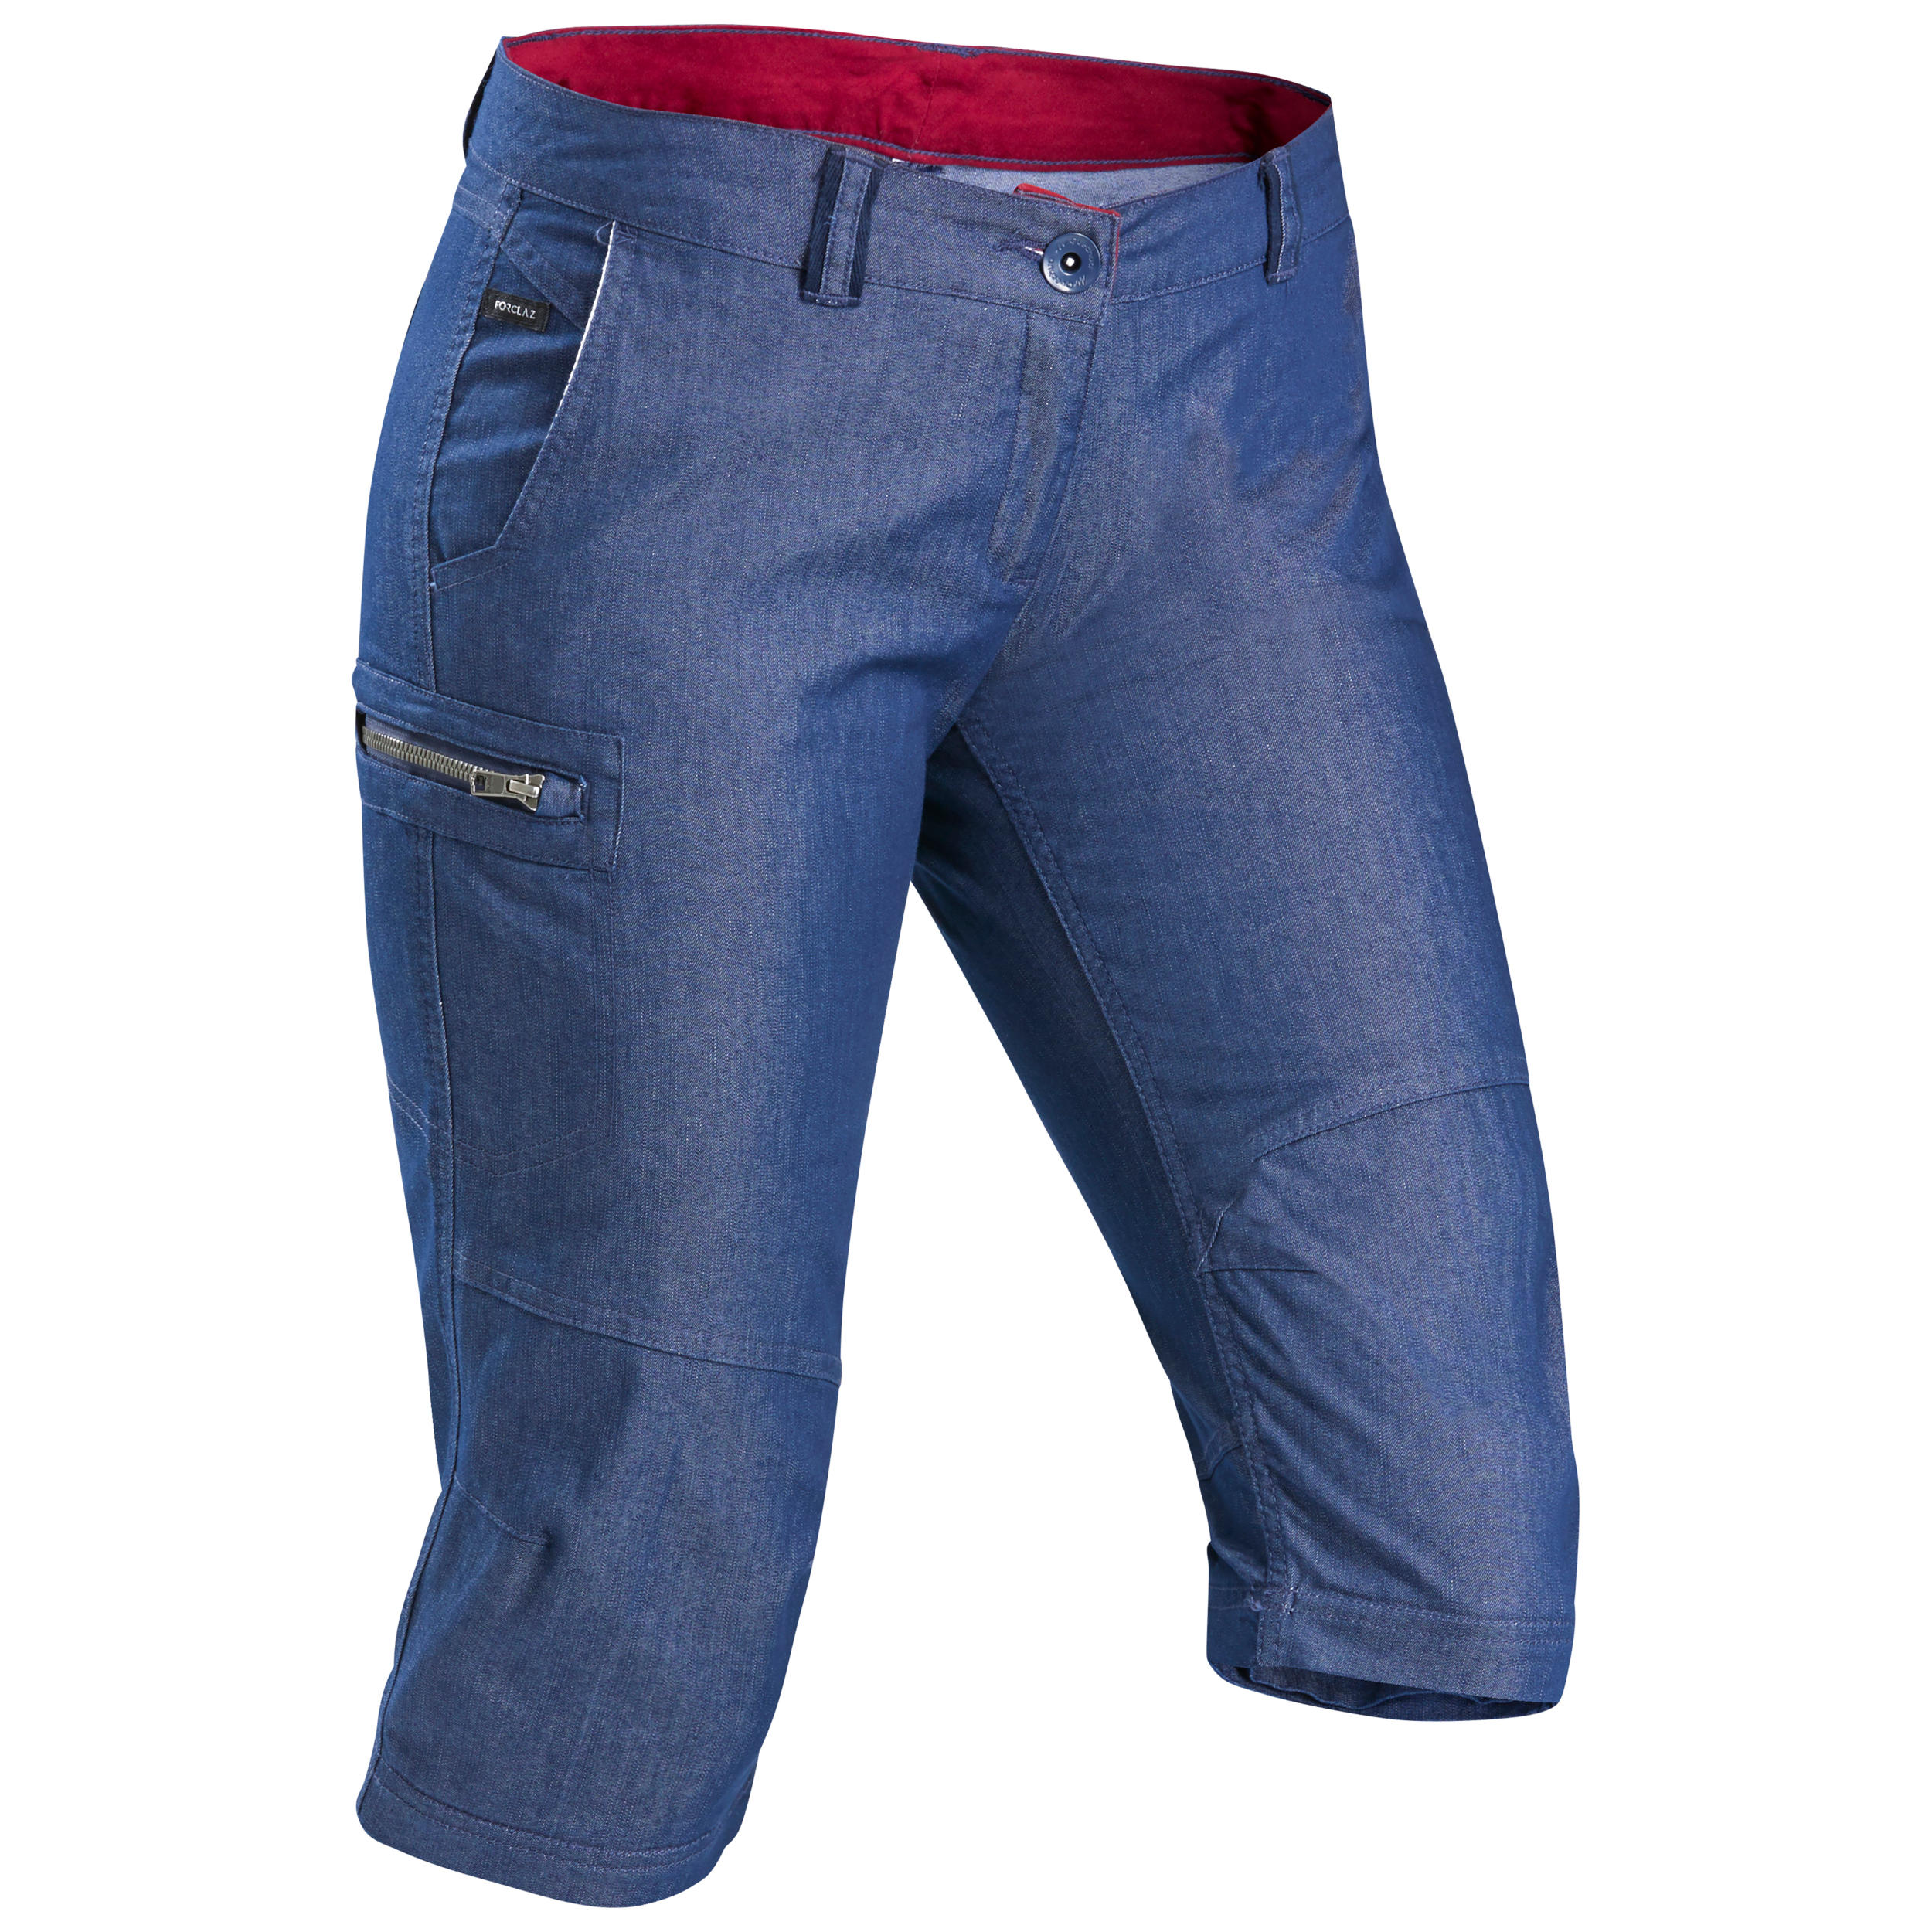 Women's travel trekking zip-Off trousers - TRAVEL 100 - blue denim 6/15